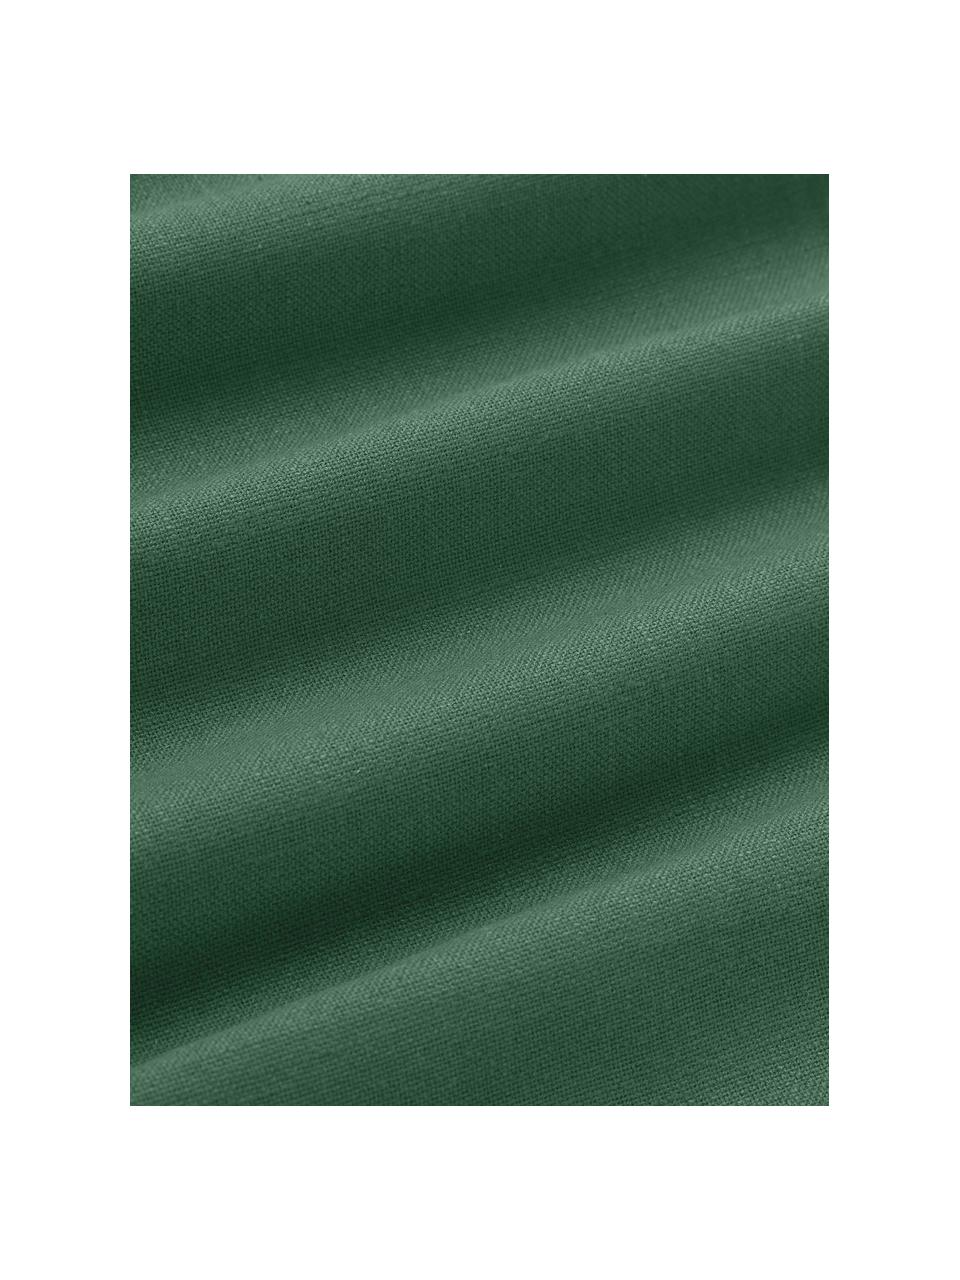 Funda de cojín de algodón Vicky, 100% algodón, Verde oscuro, An 30 x Al 50 cm